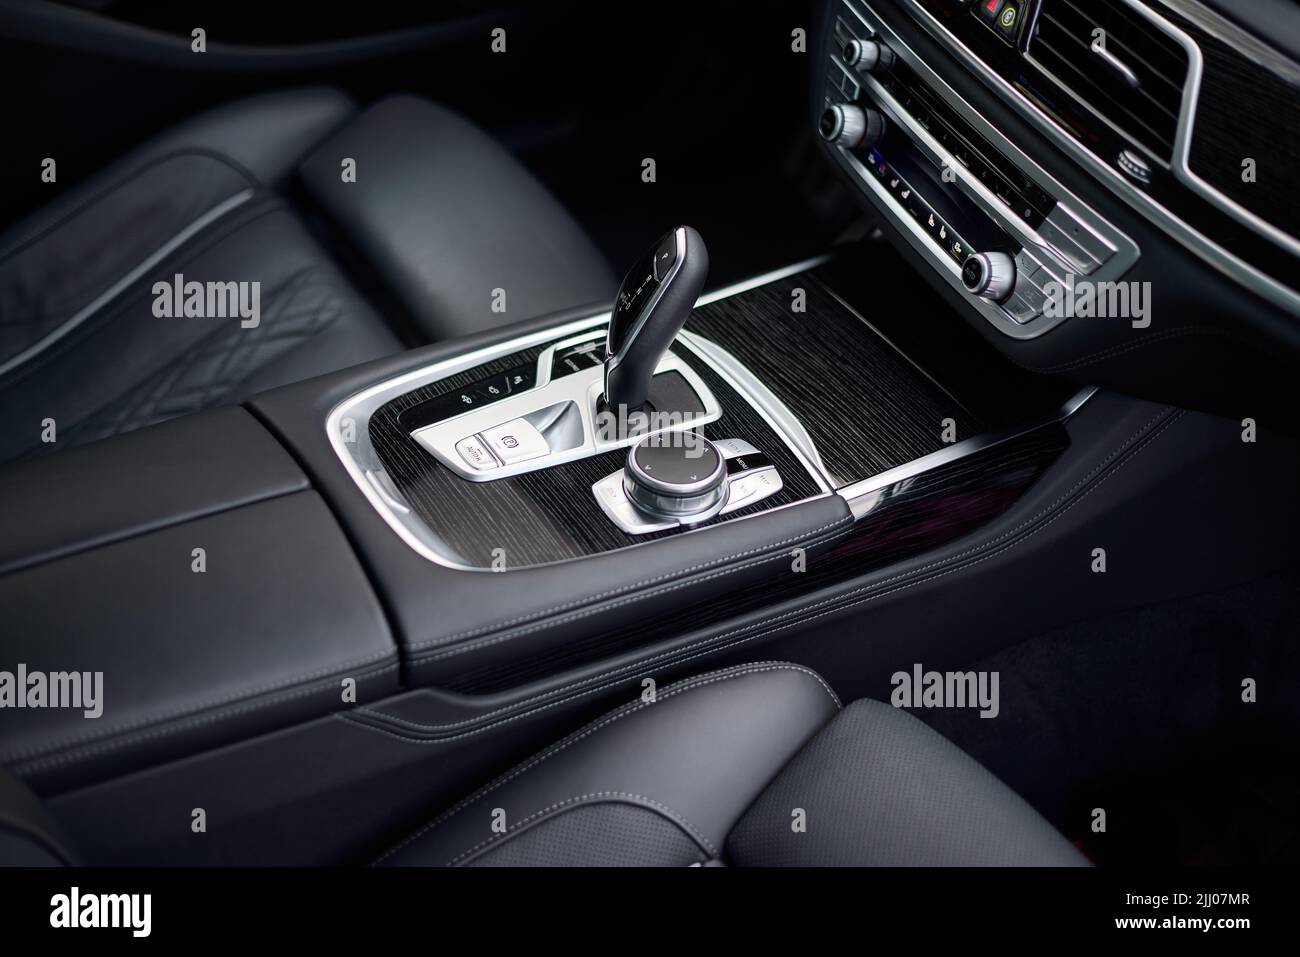 Automatic gear shift knob in a modern sports limousine car. Black car interior. Stock Photo